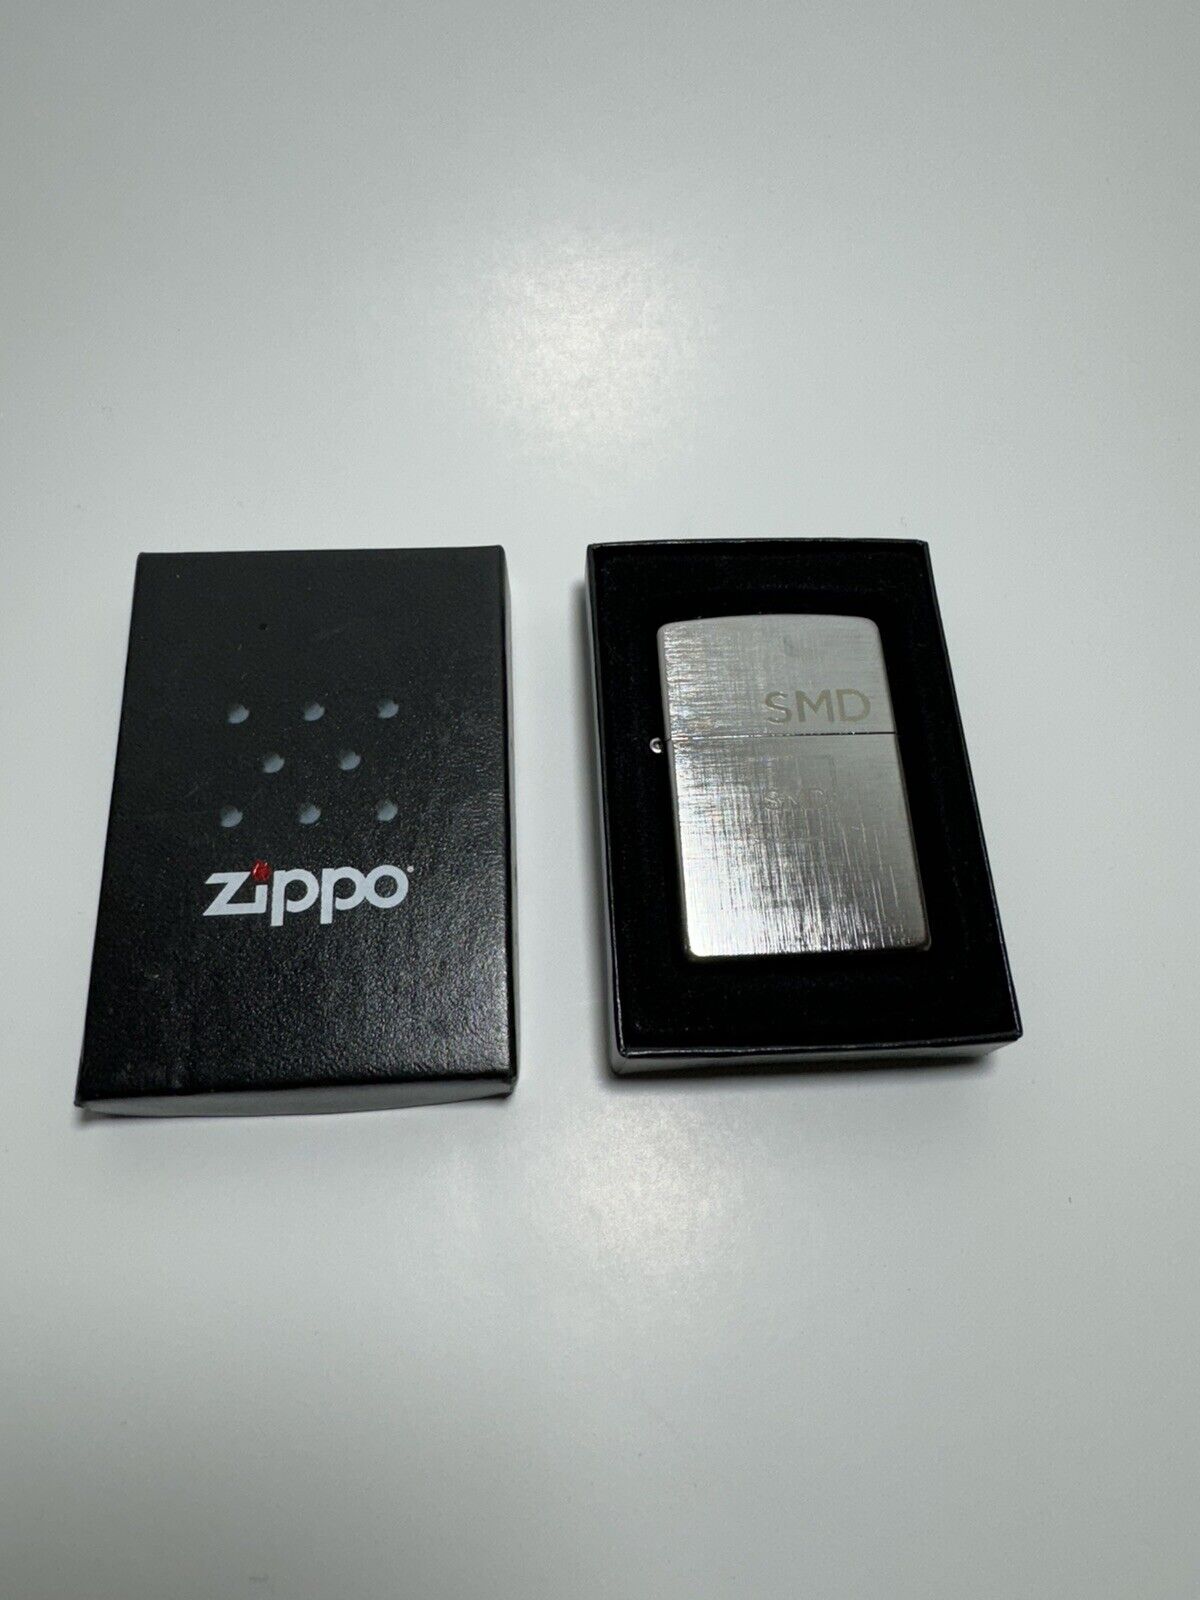 2012 Zippo Windproof Lighter Unfired SMD Original Box